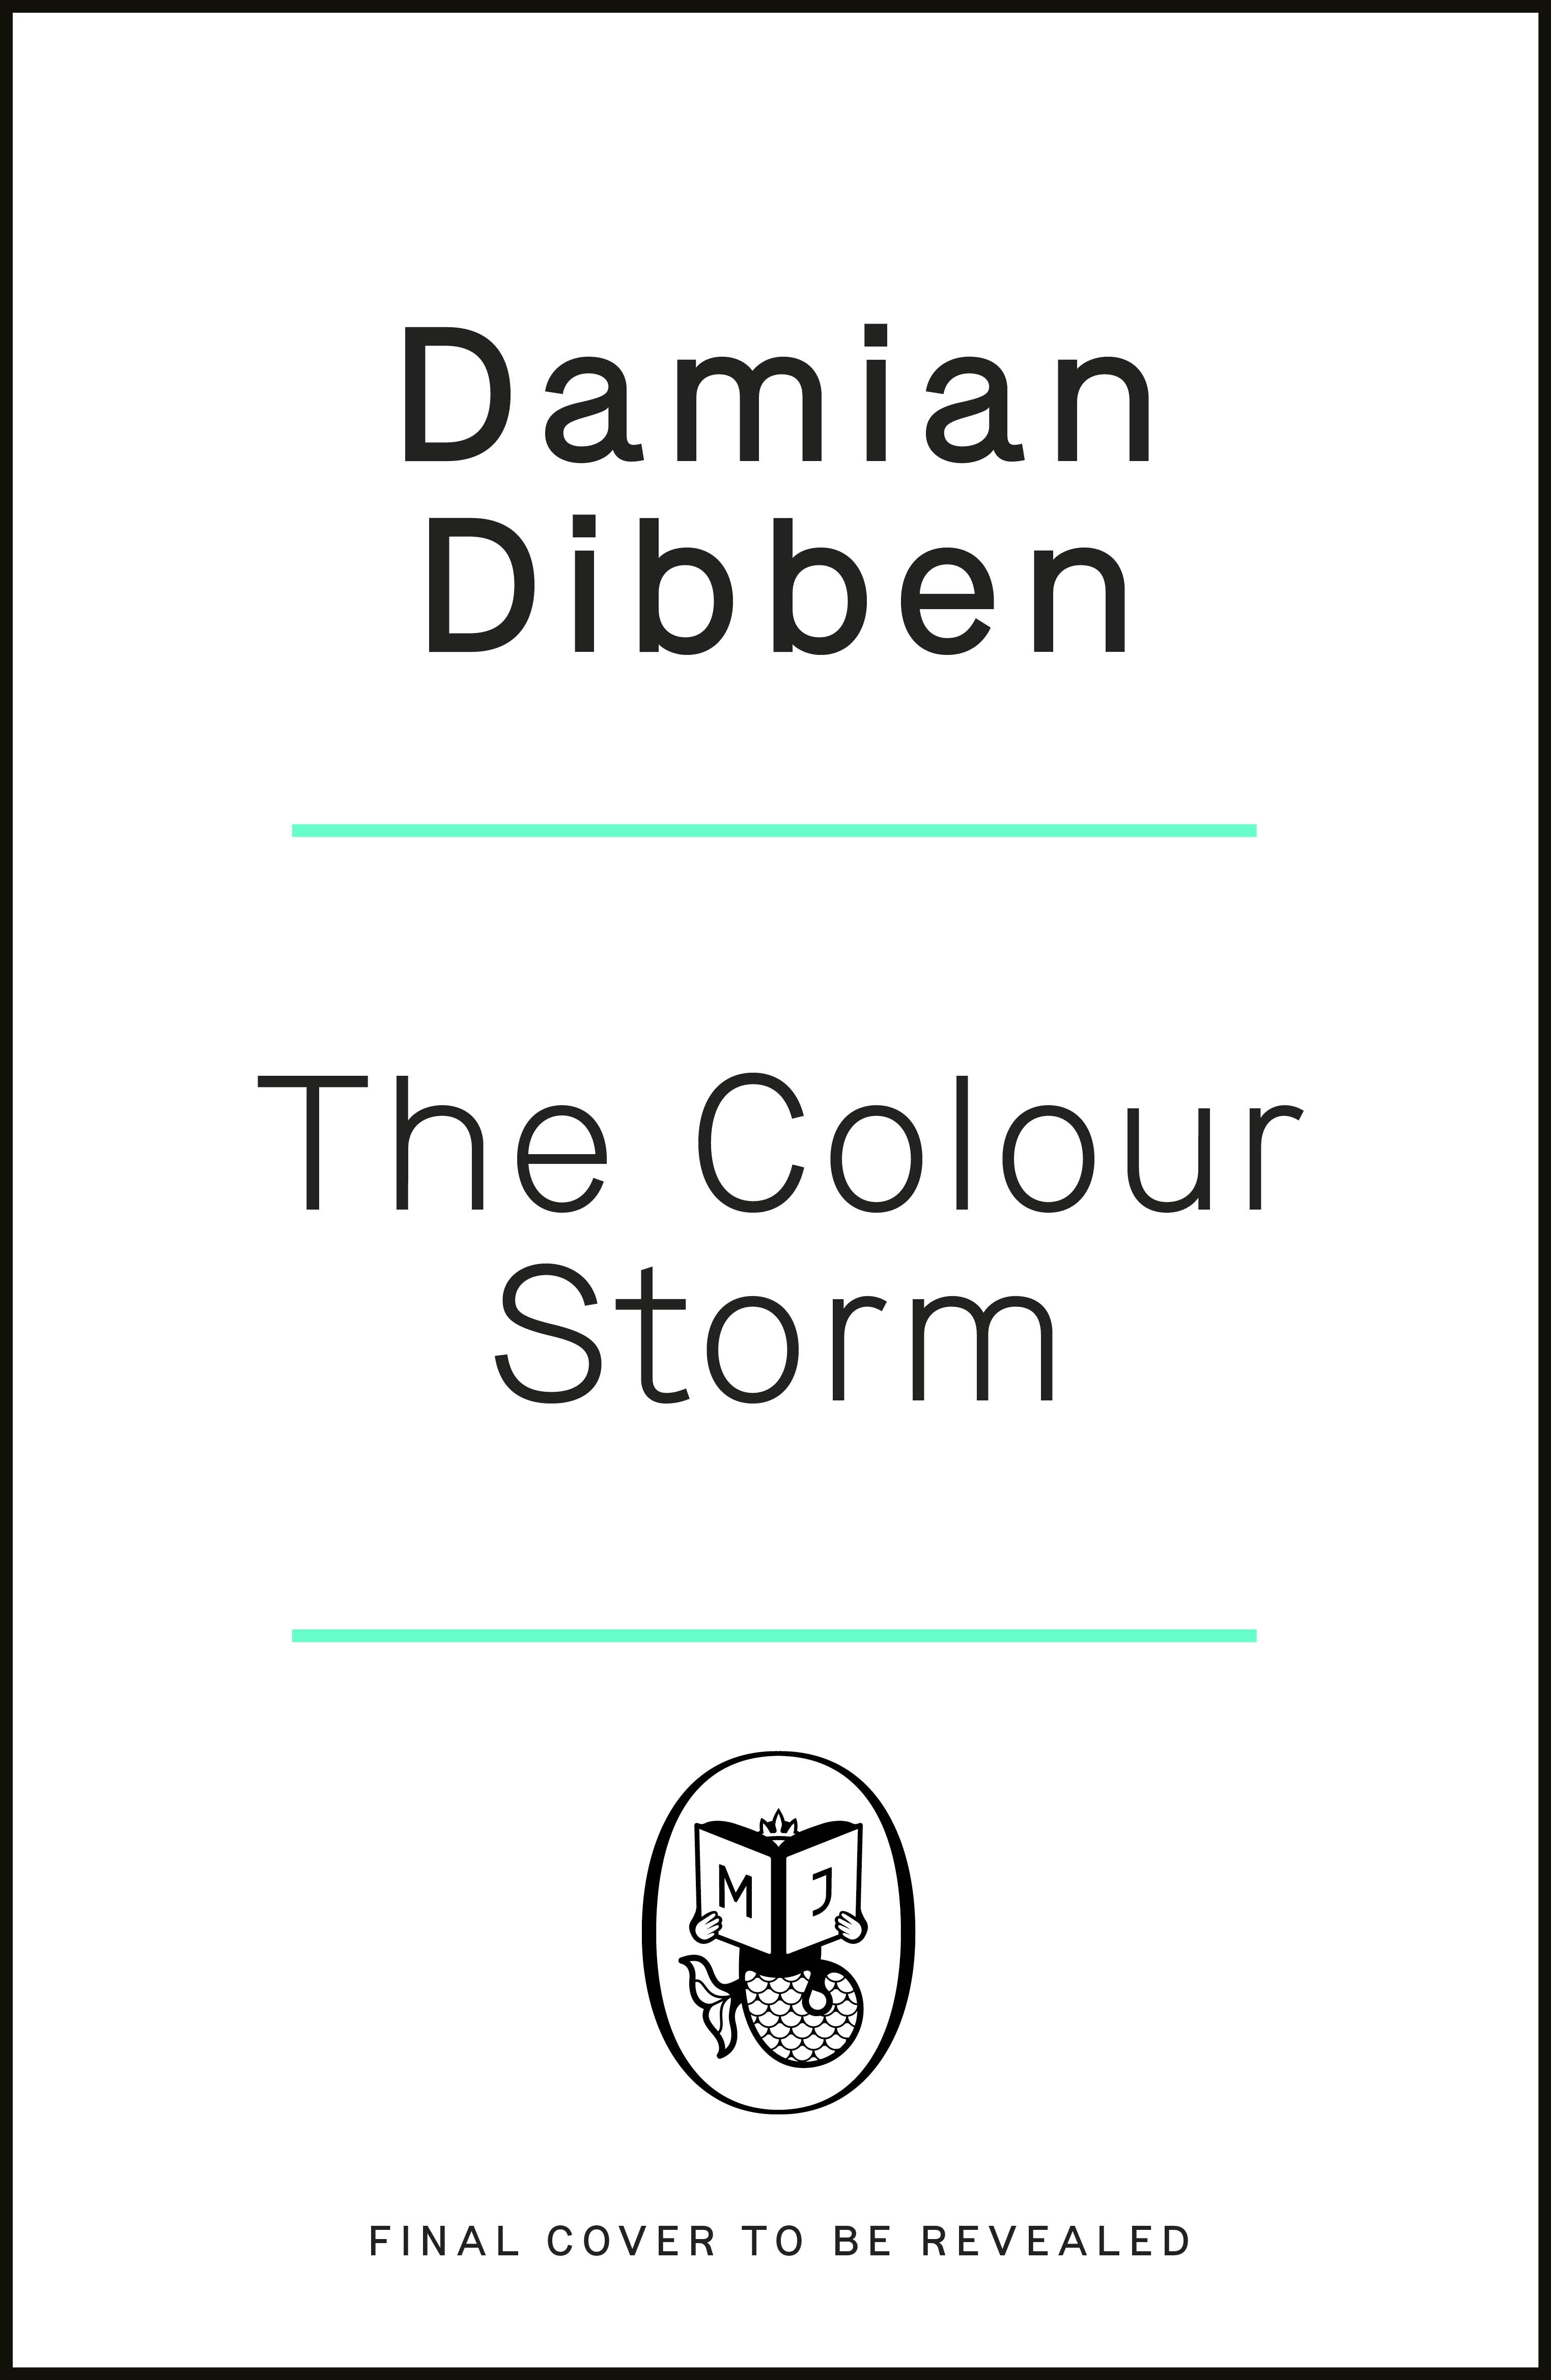 Book “The Colour Storm” by Damian Dibben — June 23, 2022